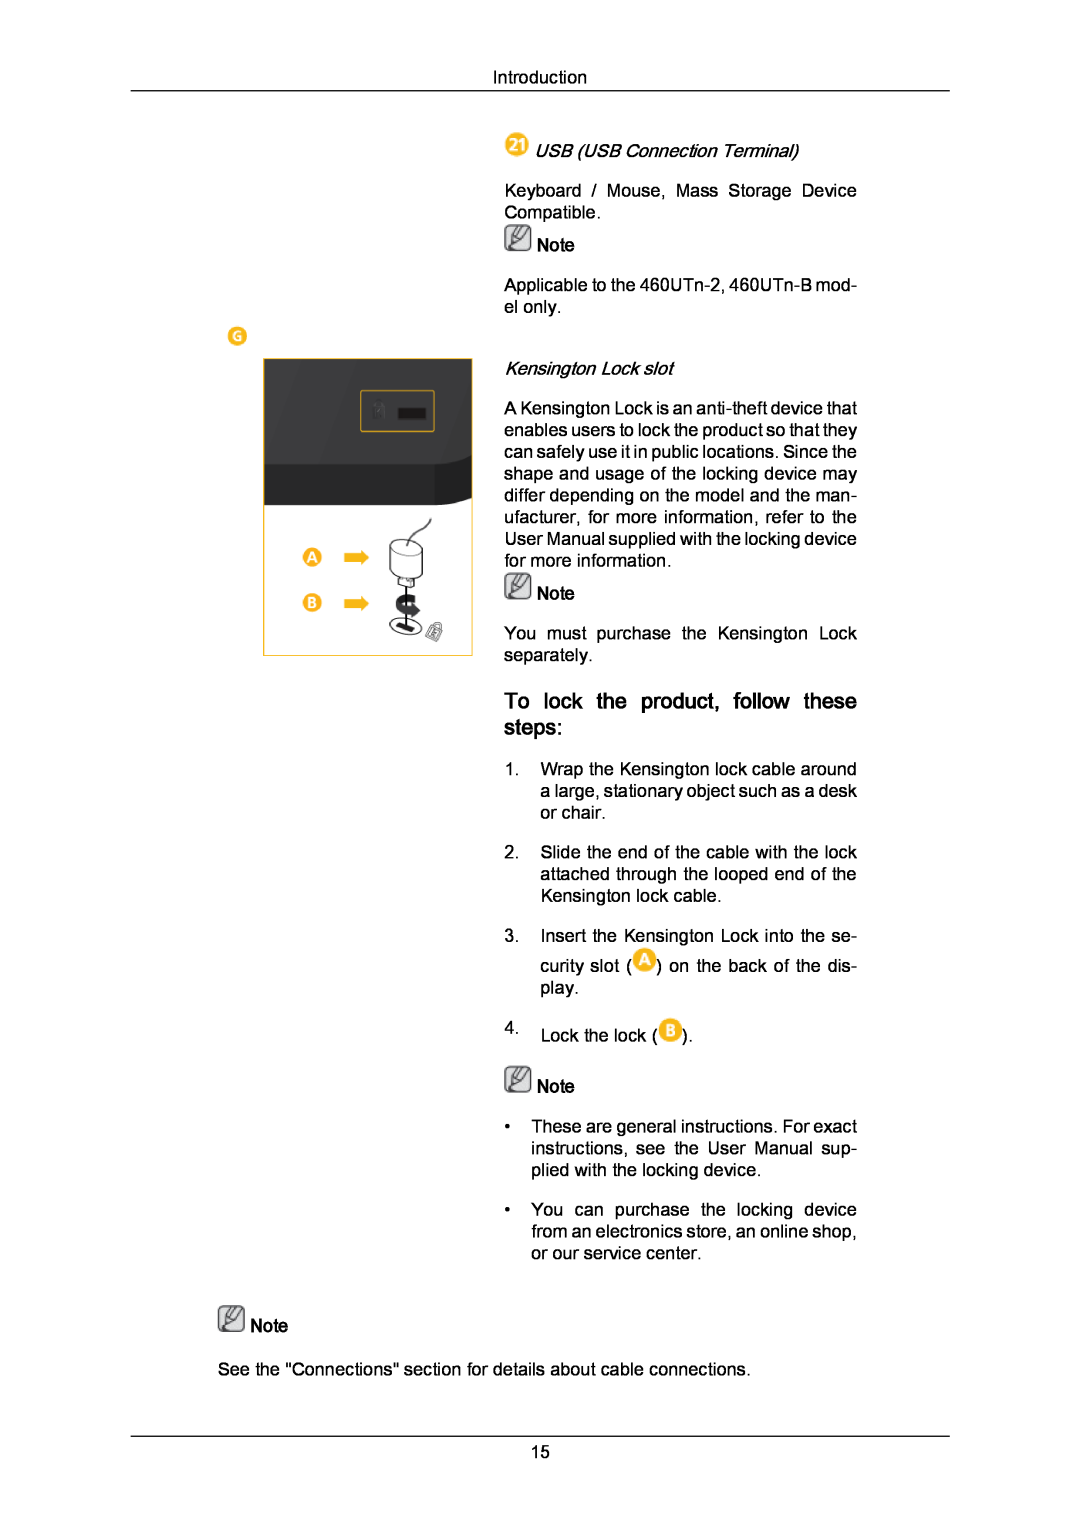 Samsung 460UTN-B, 460UTN-2 To lock the product, follow these steps, USB USB Connection Terminal, Kensington Lock slot 